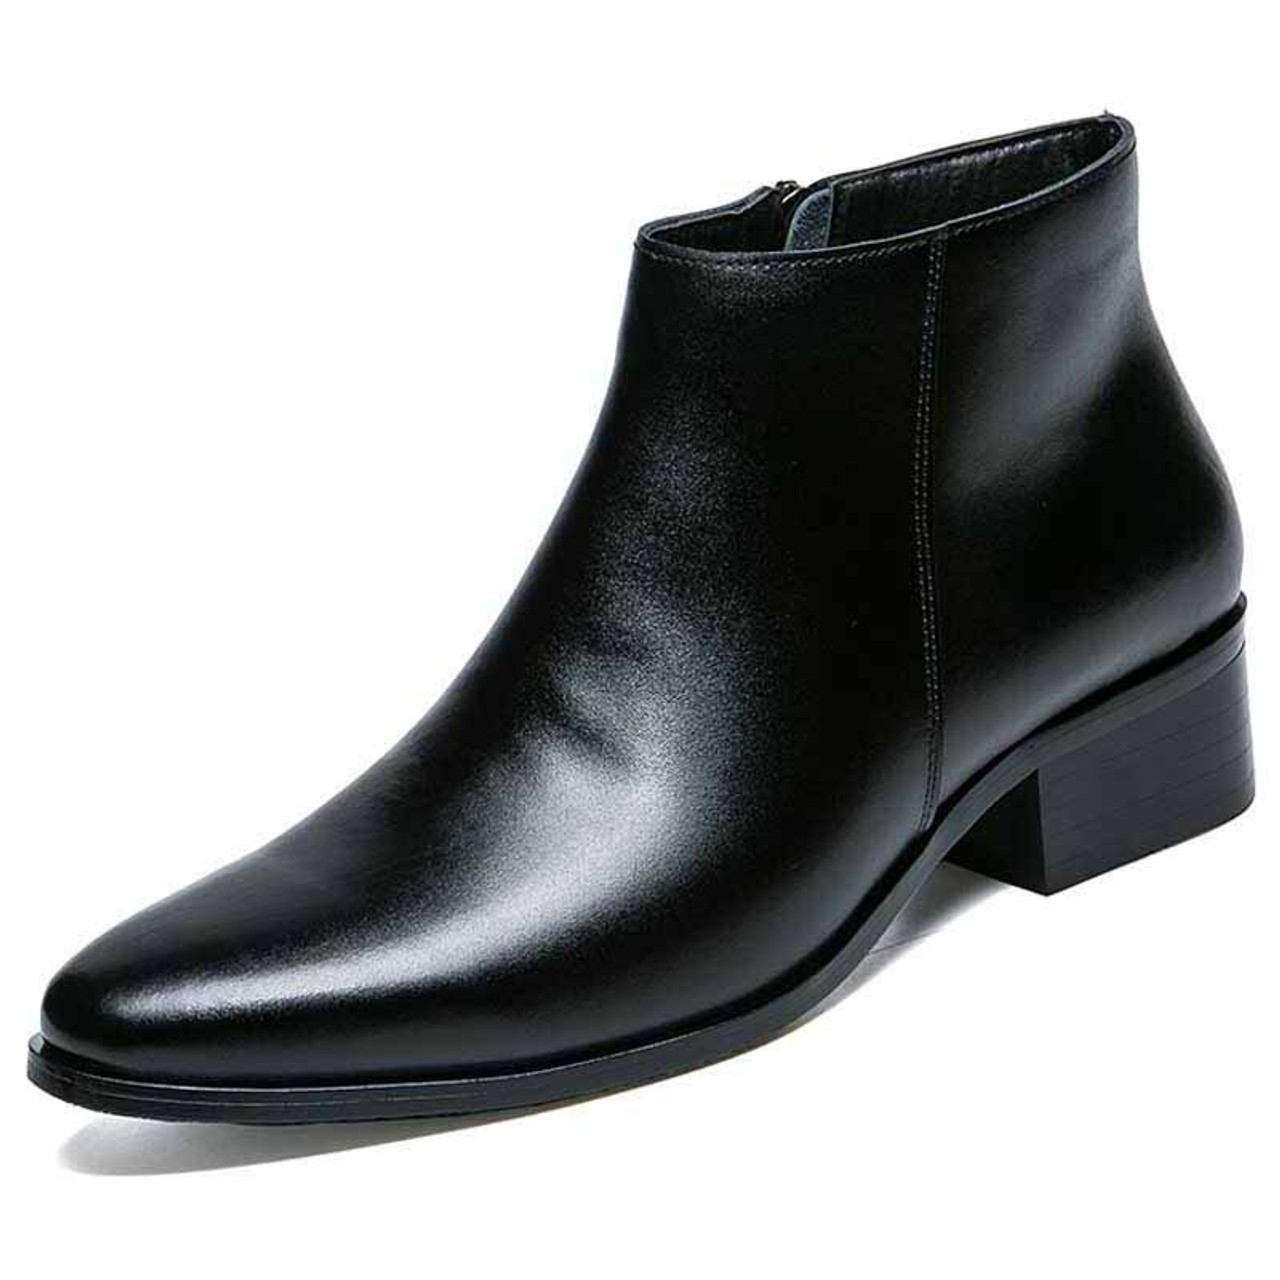 mens black dress shoes boots